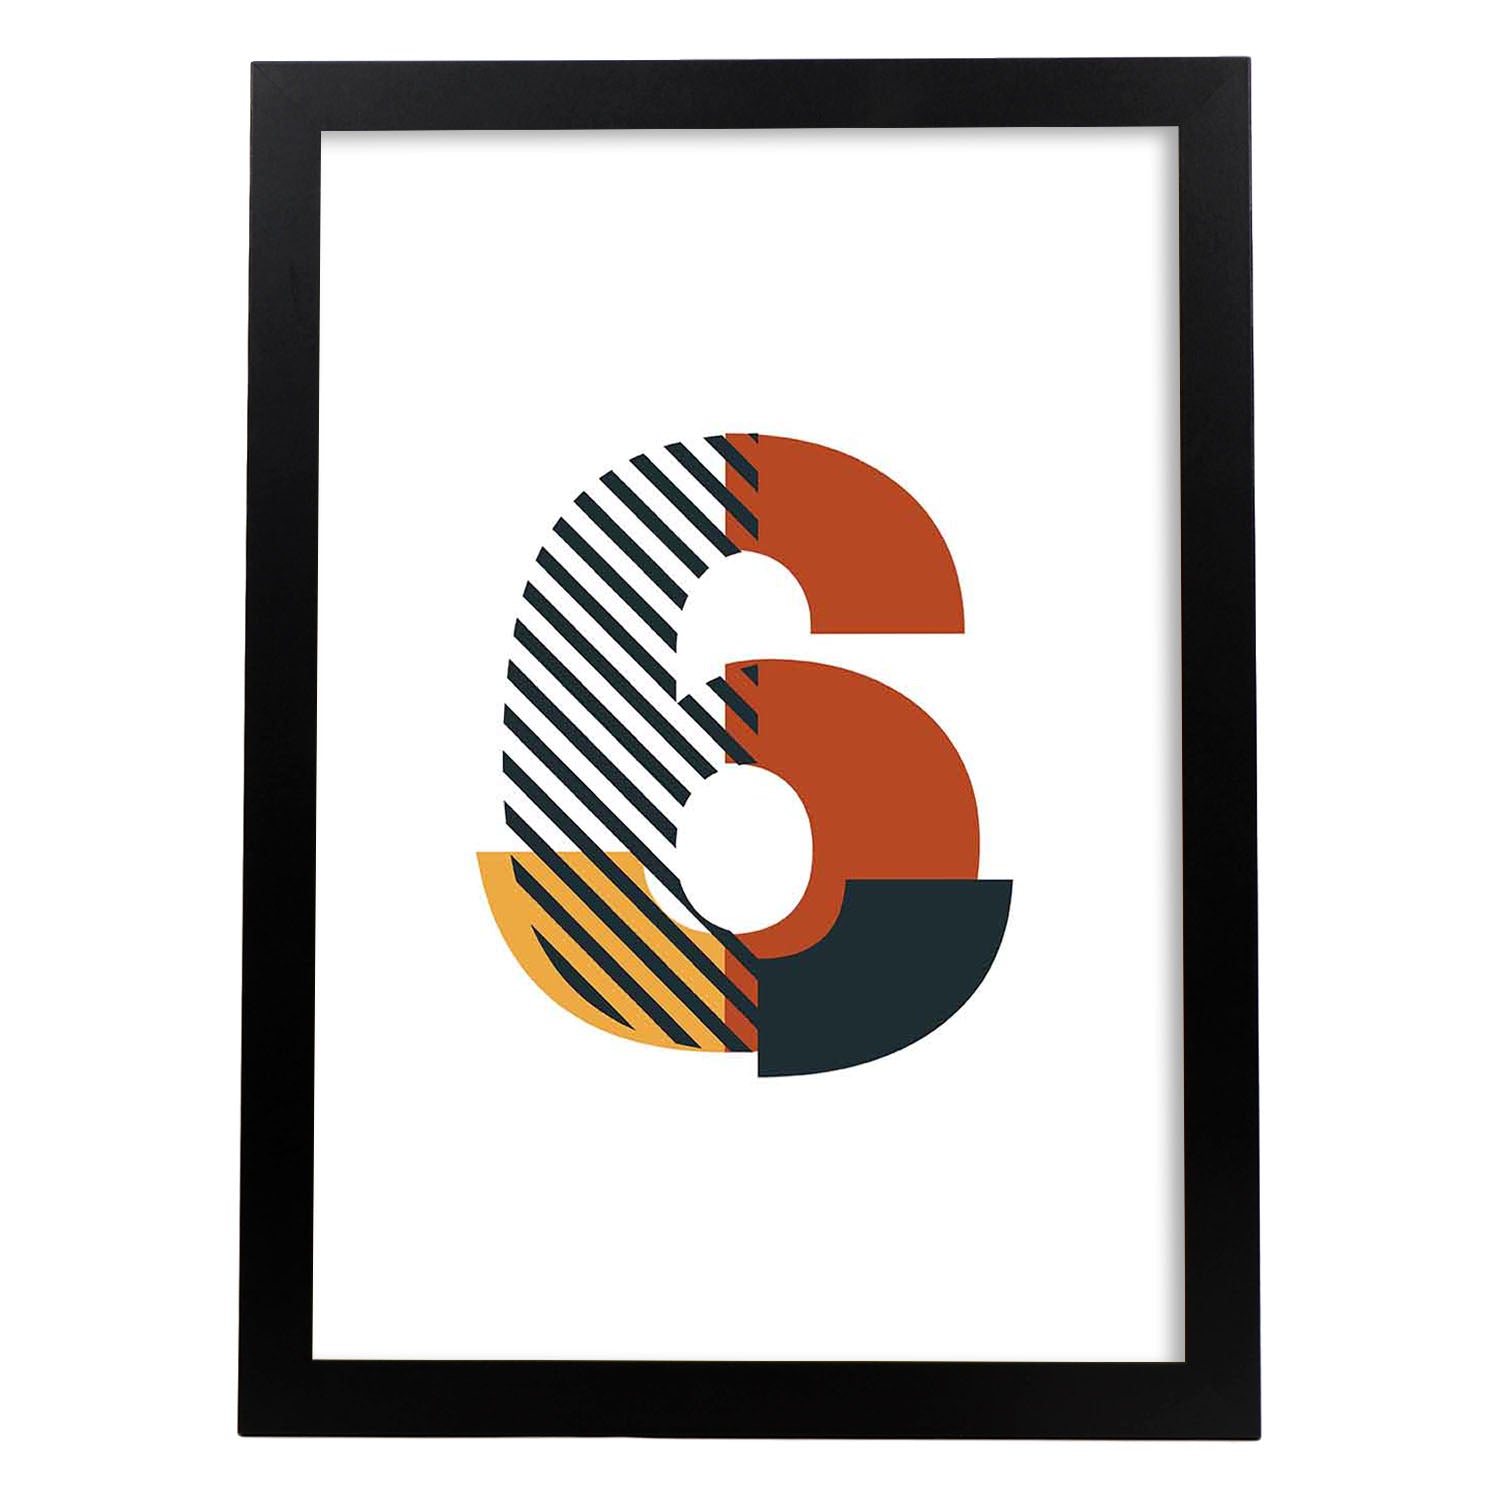 Poster de número 6. Lámina estilo Geometria con imágenes del alfabeto.-Artwork-Nacnic-A4-Marco Negro-Nacnic Estudio SL